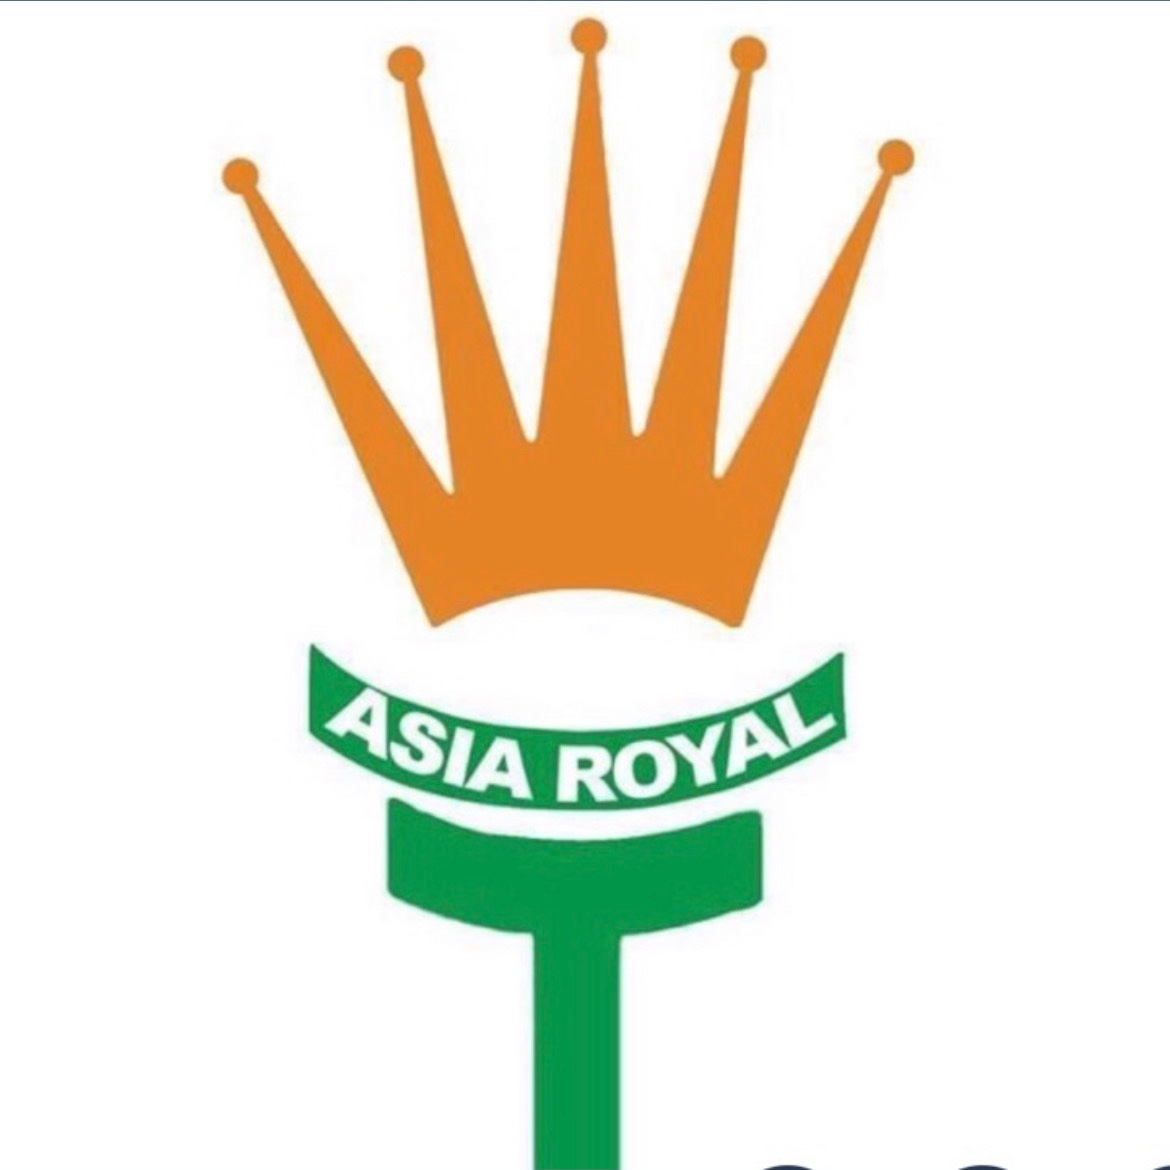 Asia Royal Hospital